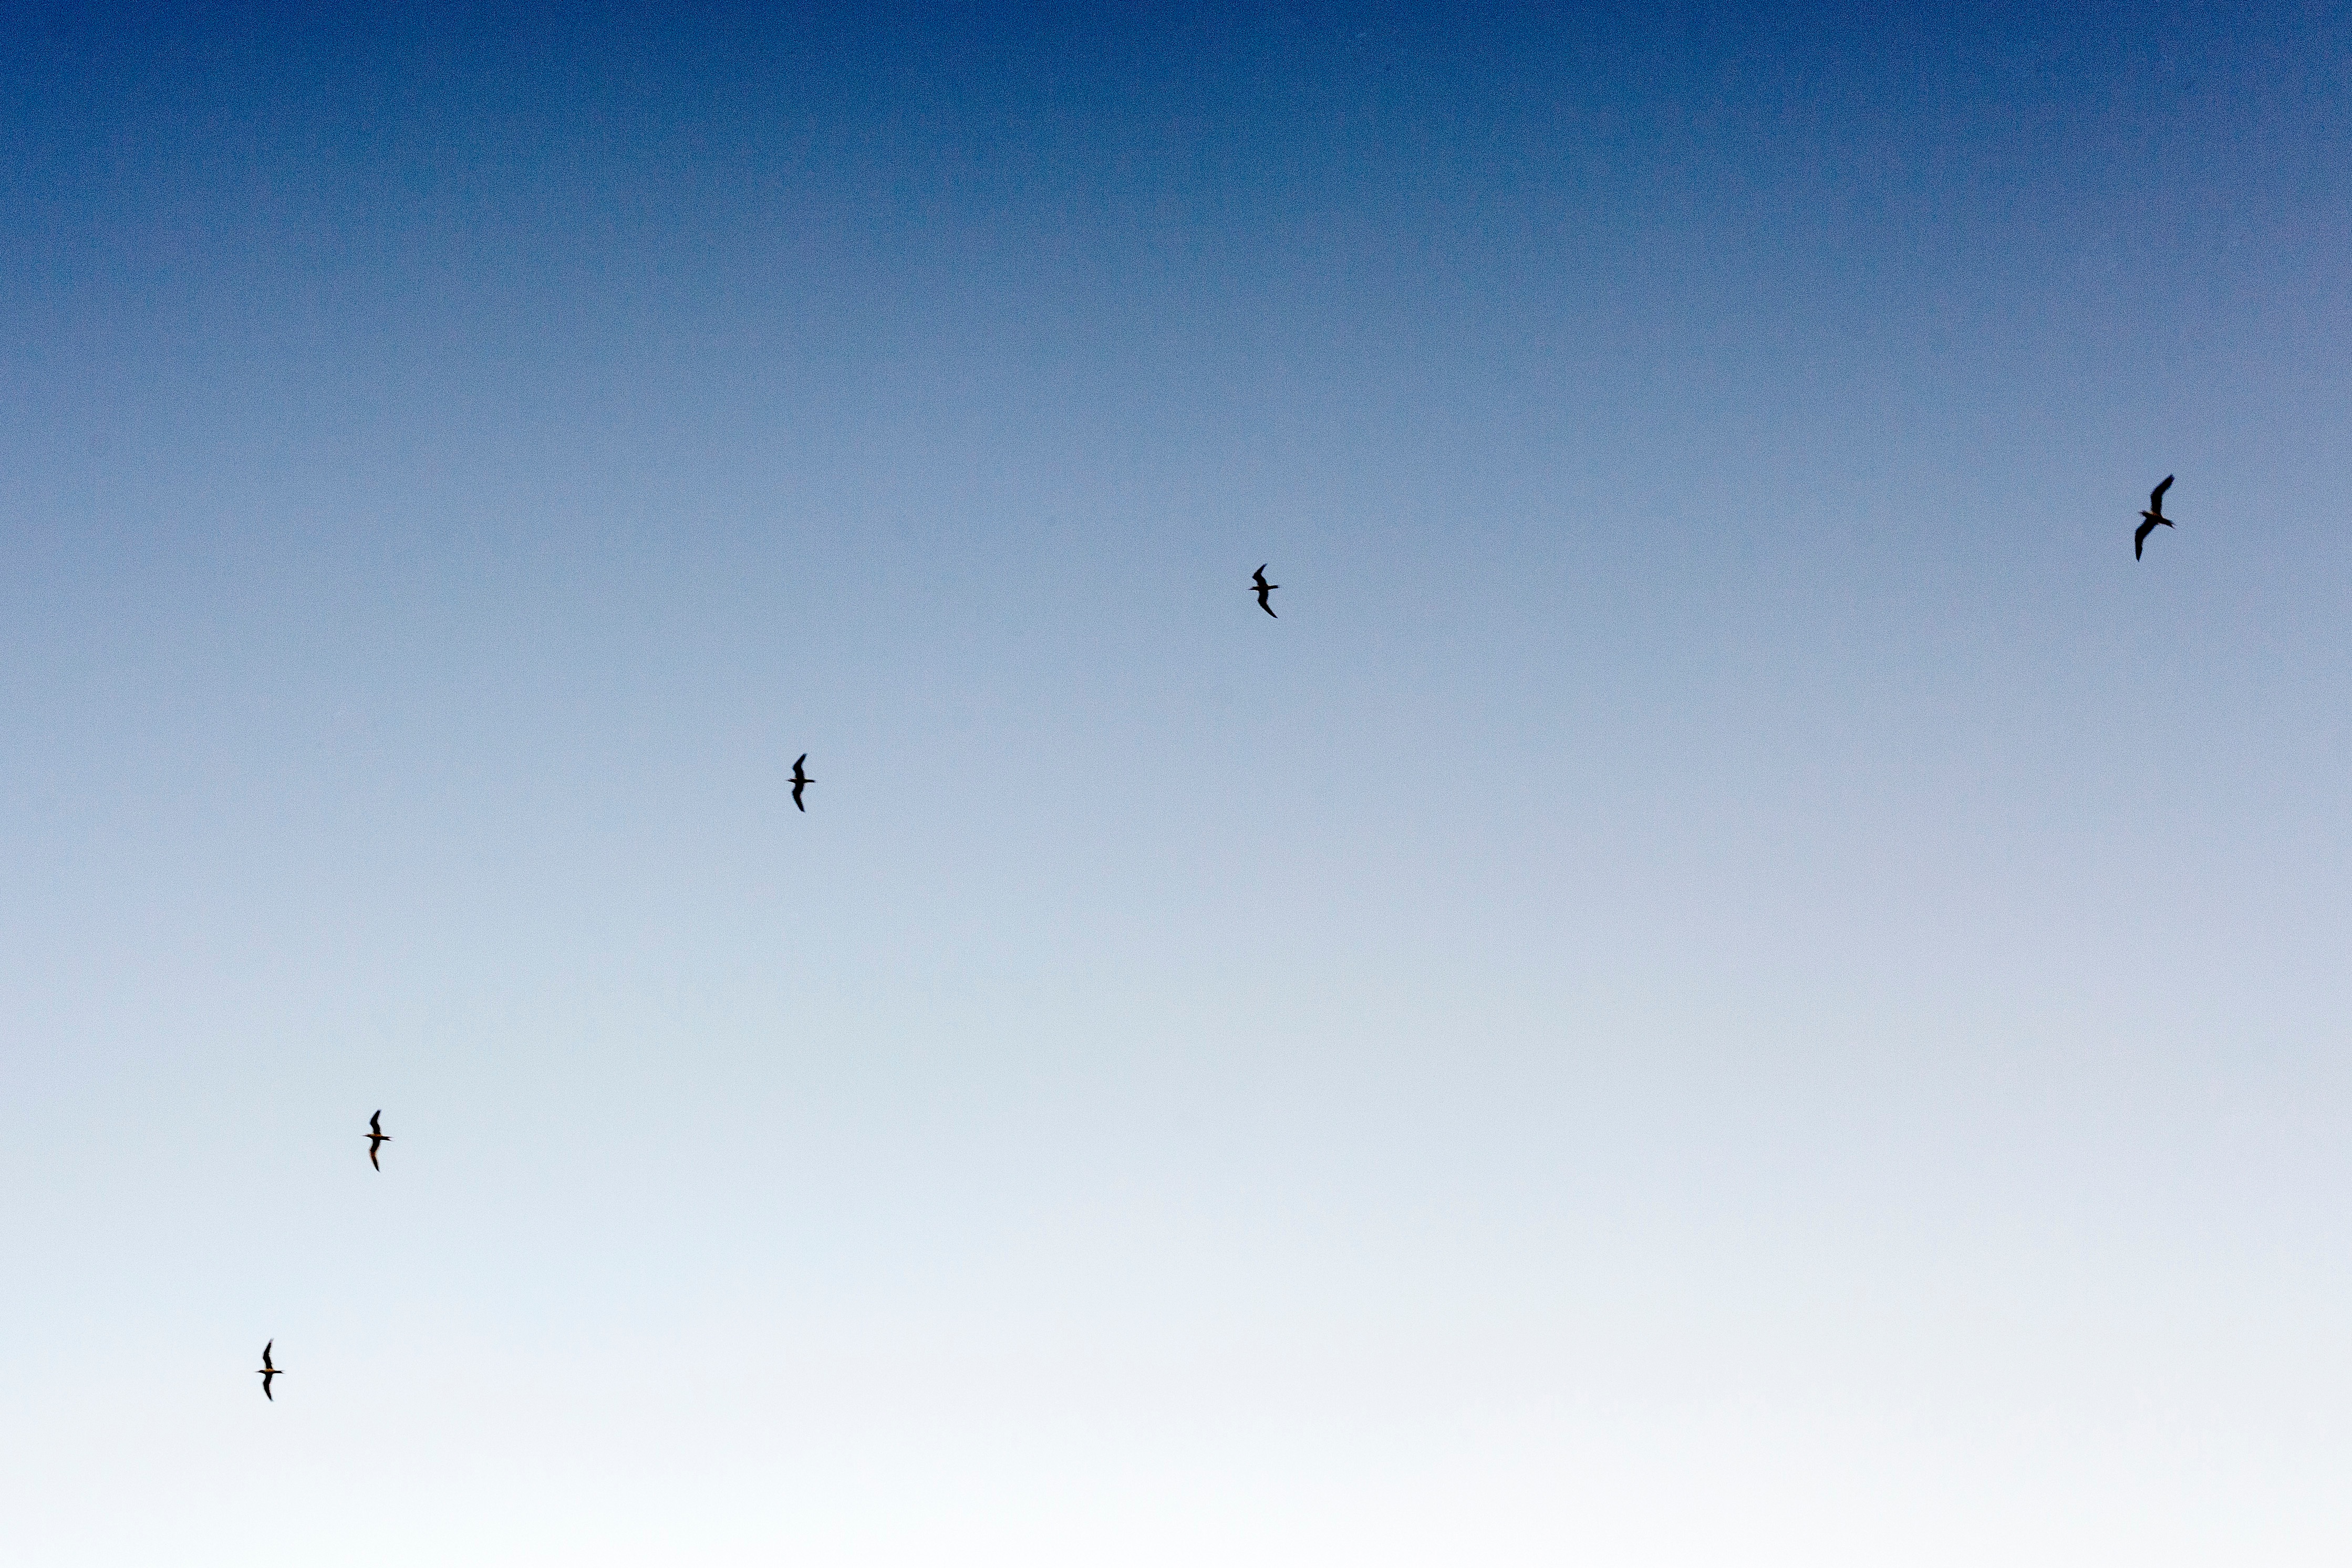 Seagulls flying against a clear blue sky